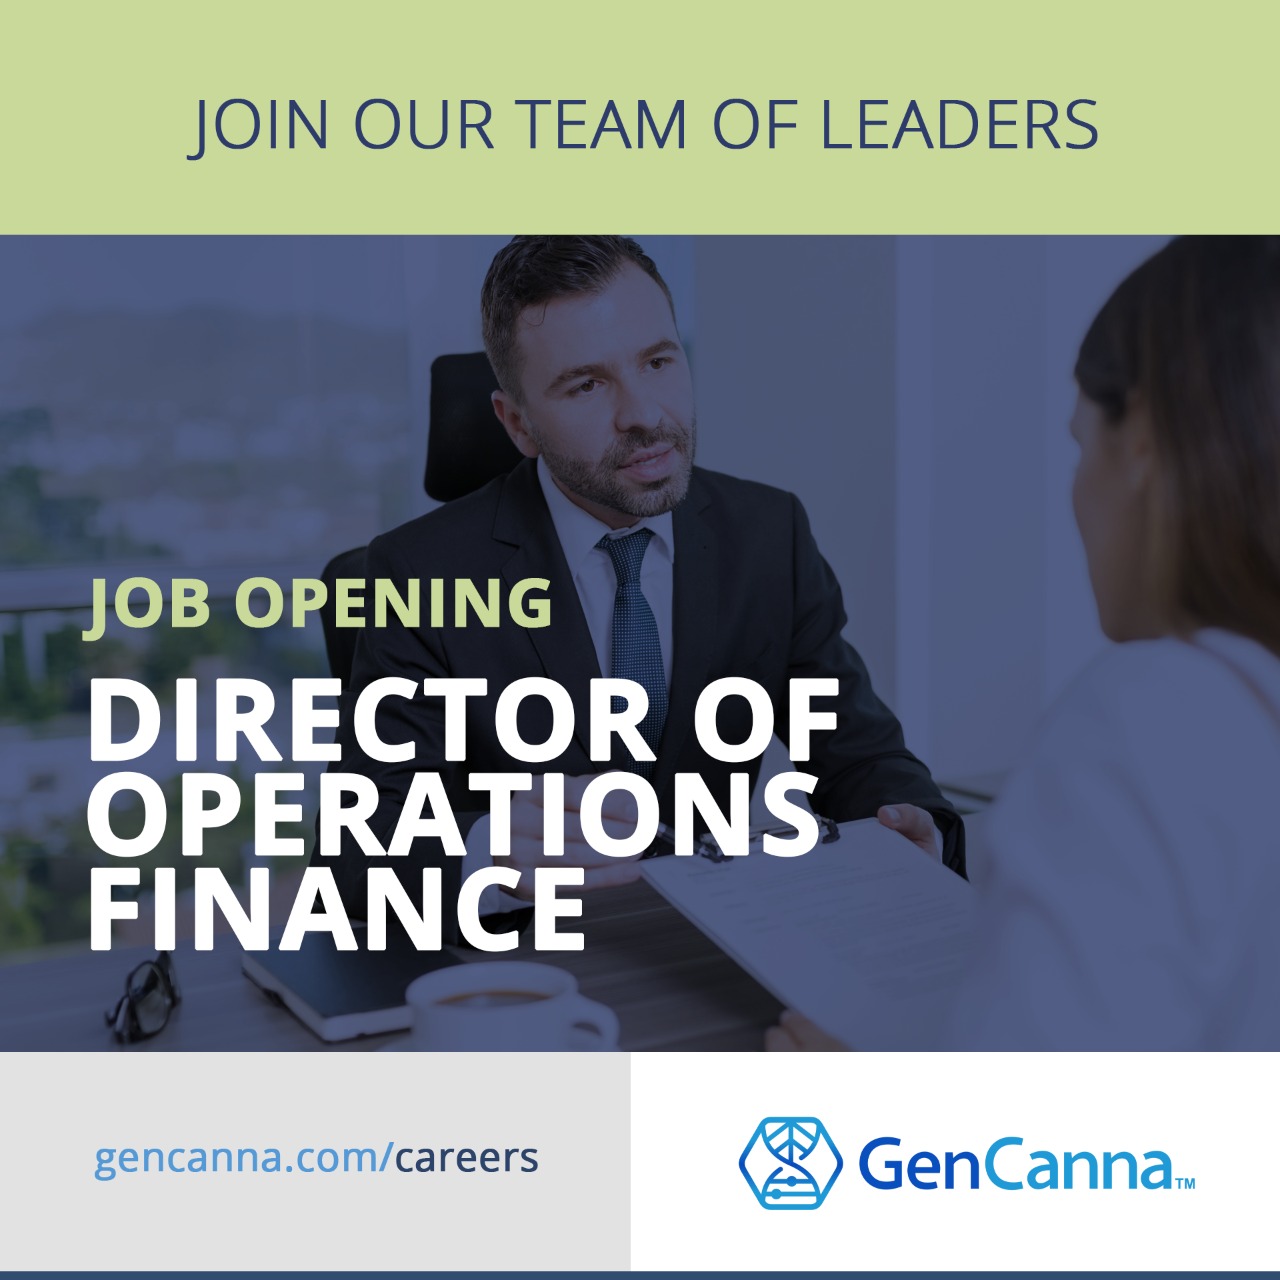 GenCanna is hiring Director of Operations Finance